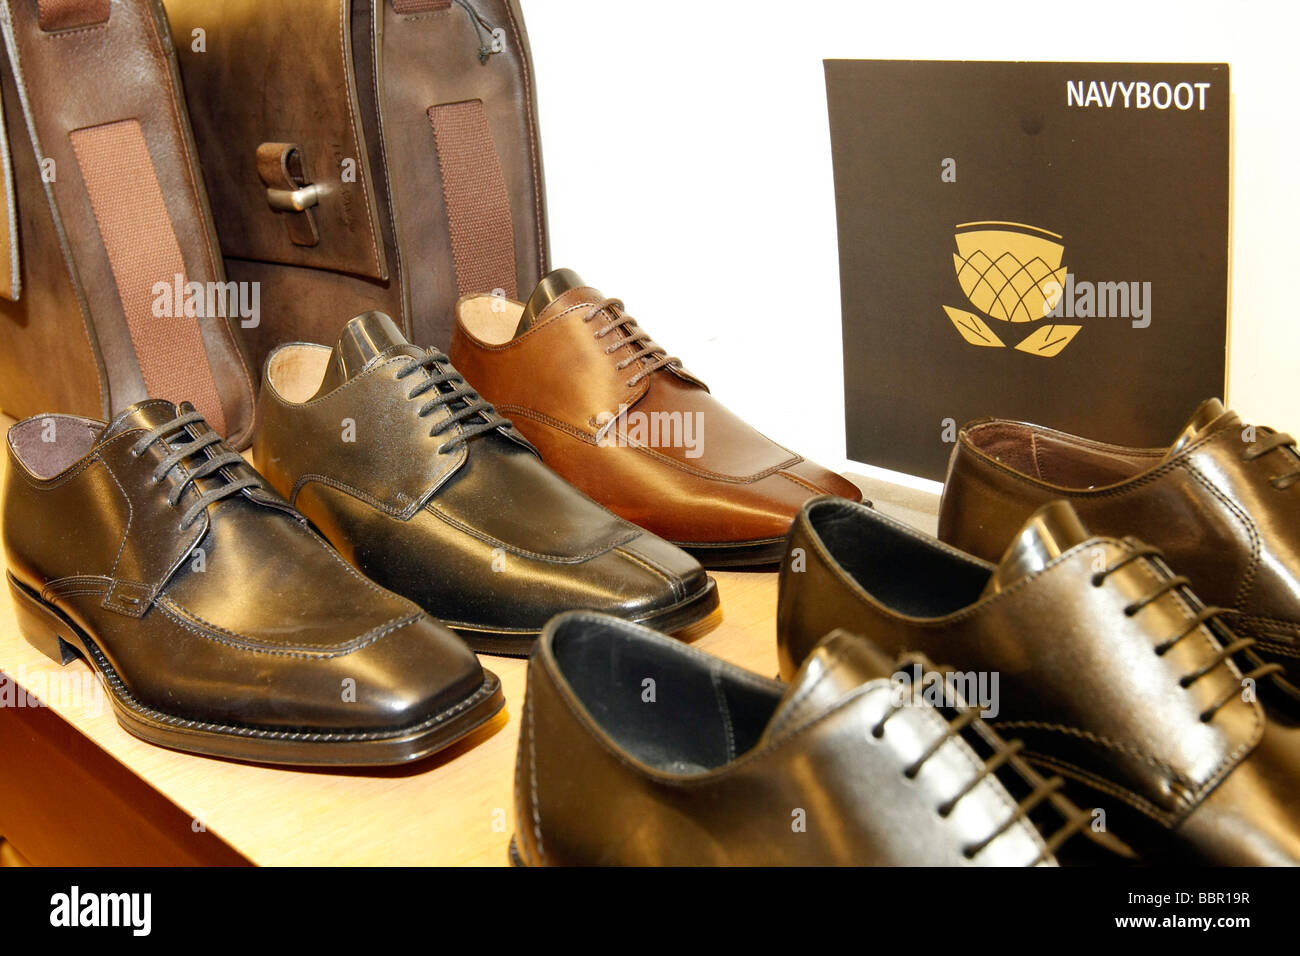 Magasin de vente de chaussures, 'NAVYBOOT", GENÈVE, SUISSE Photo Stock -  Alamy